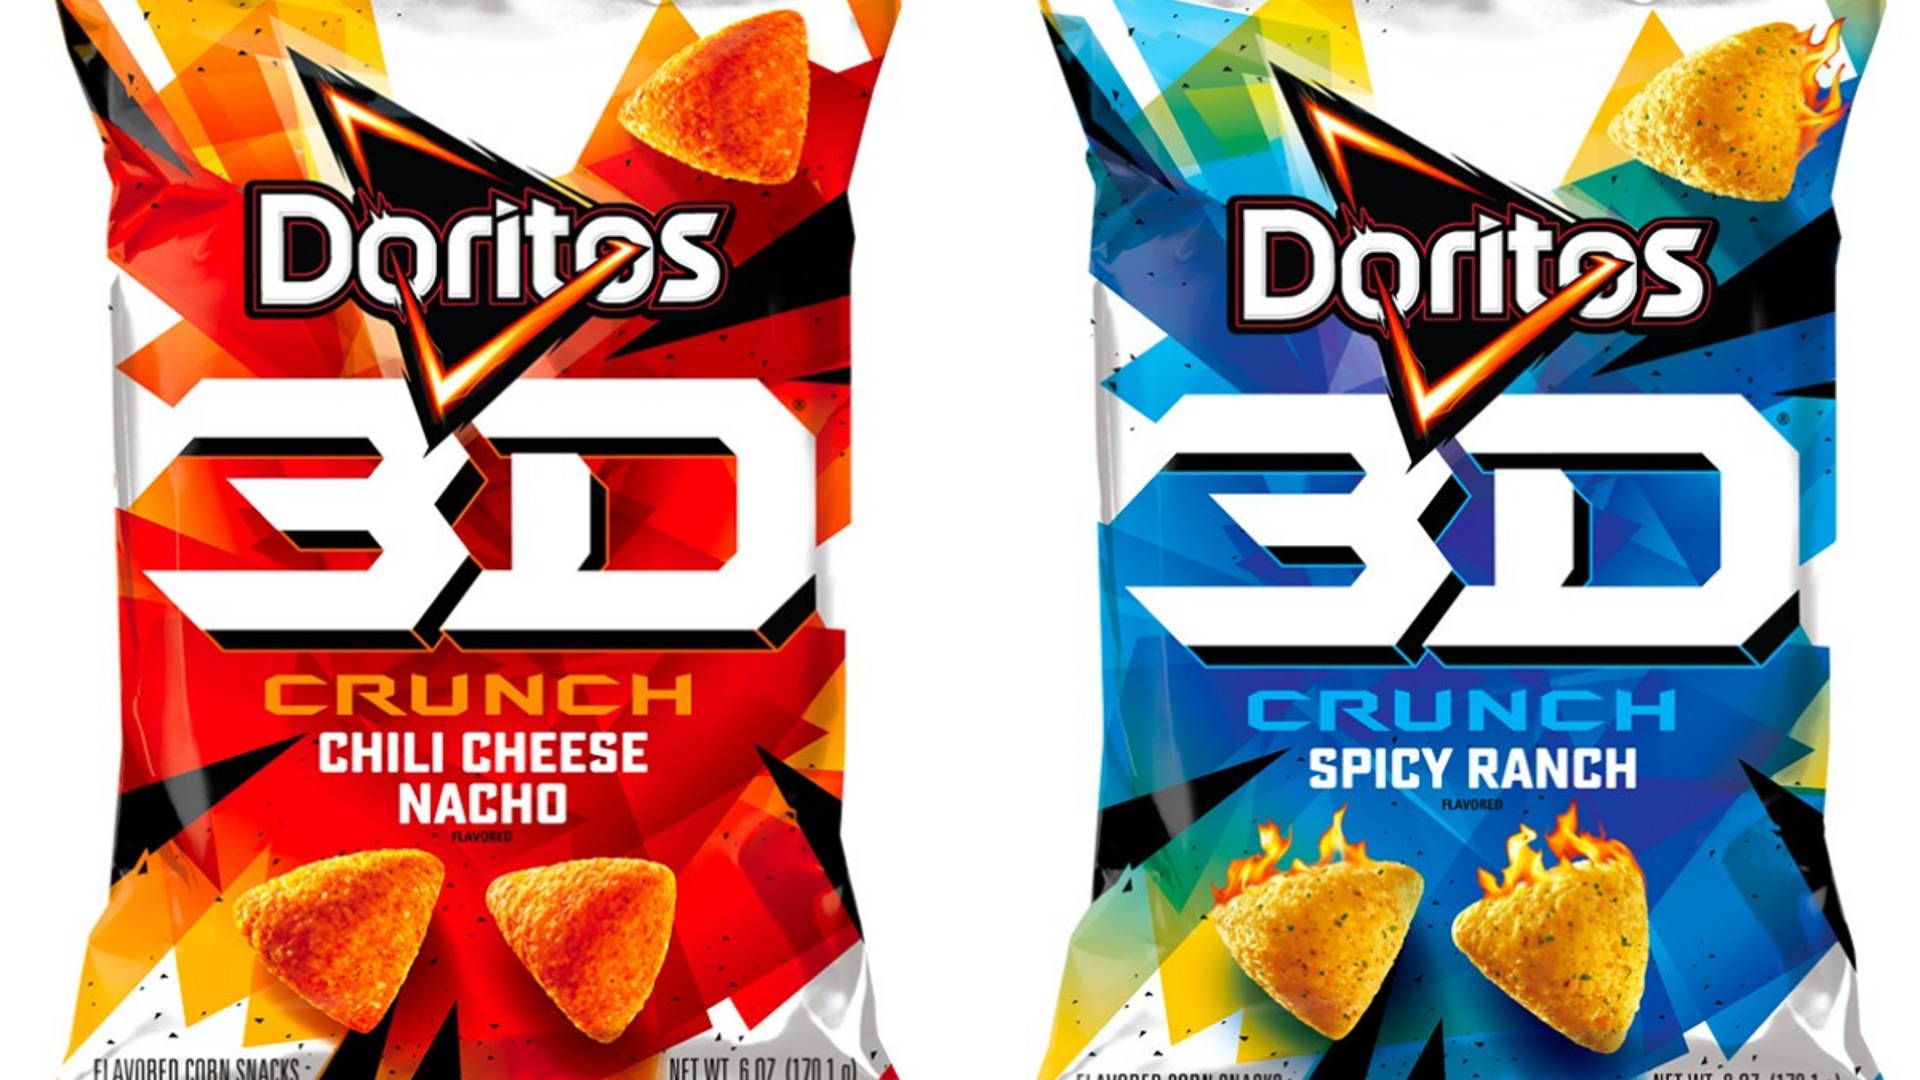 Move Over Dunkaroos, Doritos 3D Are Back. Dieline, Branding & Packaging Inspiration